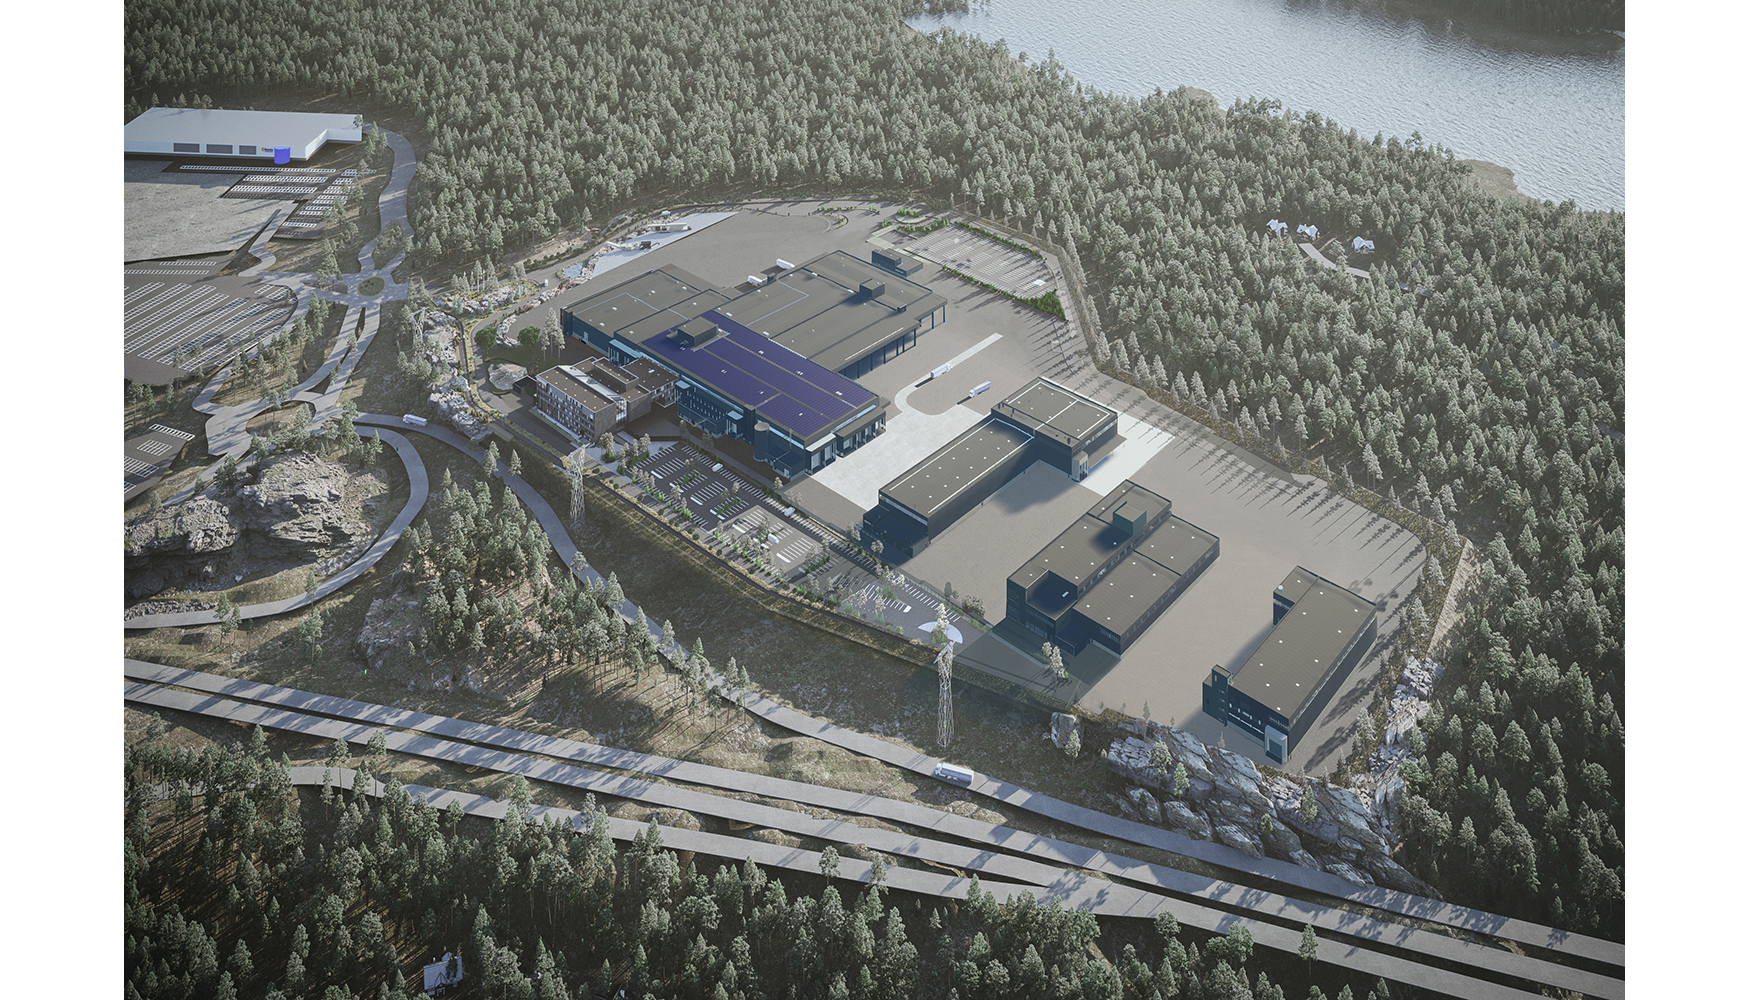 Infografa del futuro centro tecnolgico de Metso en Tampere, Finlandia